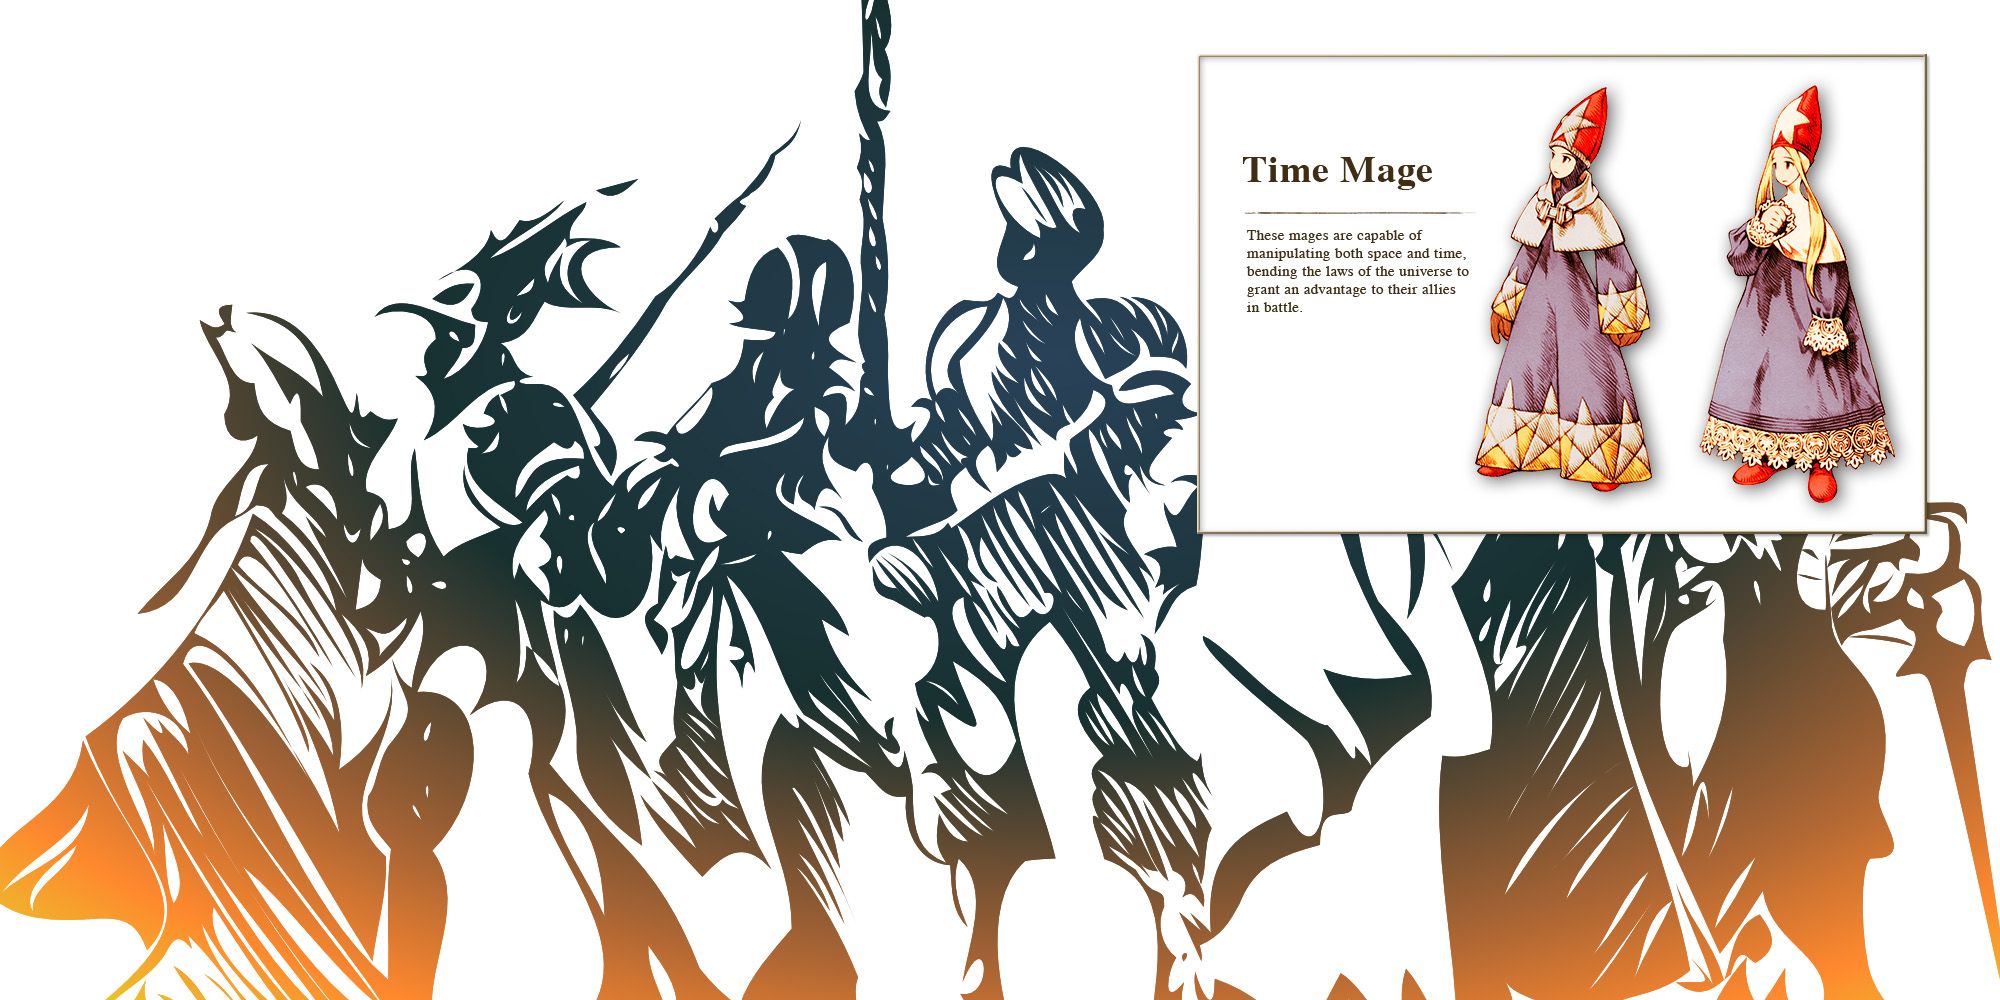 Final Fantasy Tactics time mage